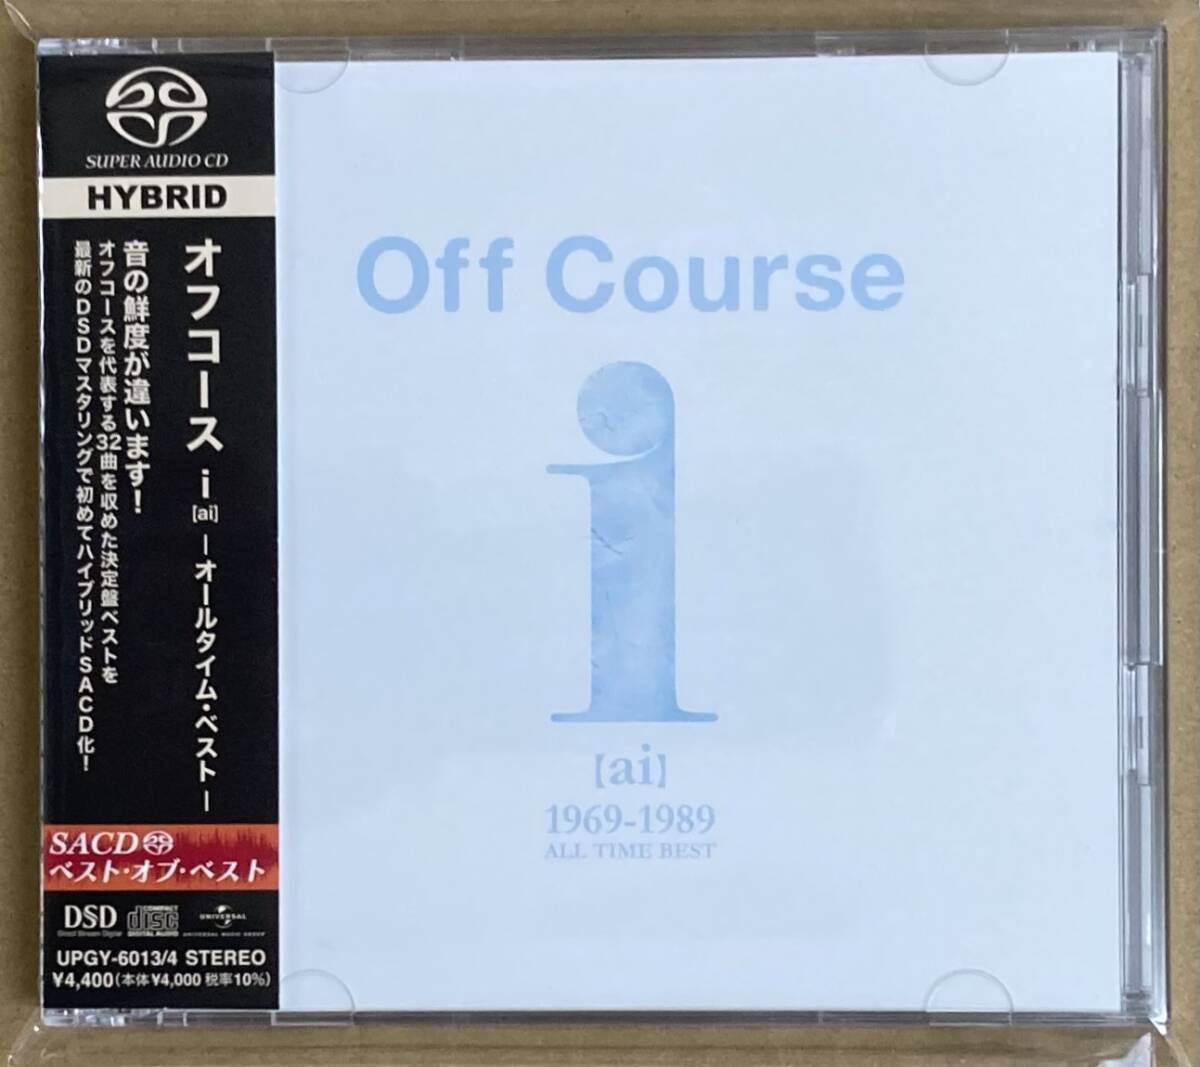 【CD】オフコース／i (ai) オールタイム ベスト《SACDハイブリッド》《2枚組》OFF COURSE／ALL TIME BEST《美品》_画像1